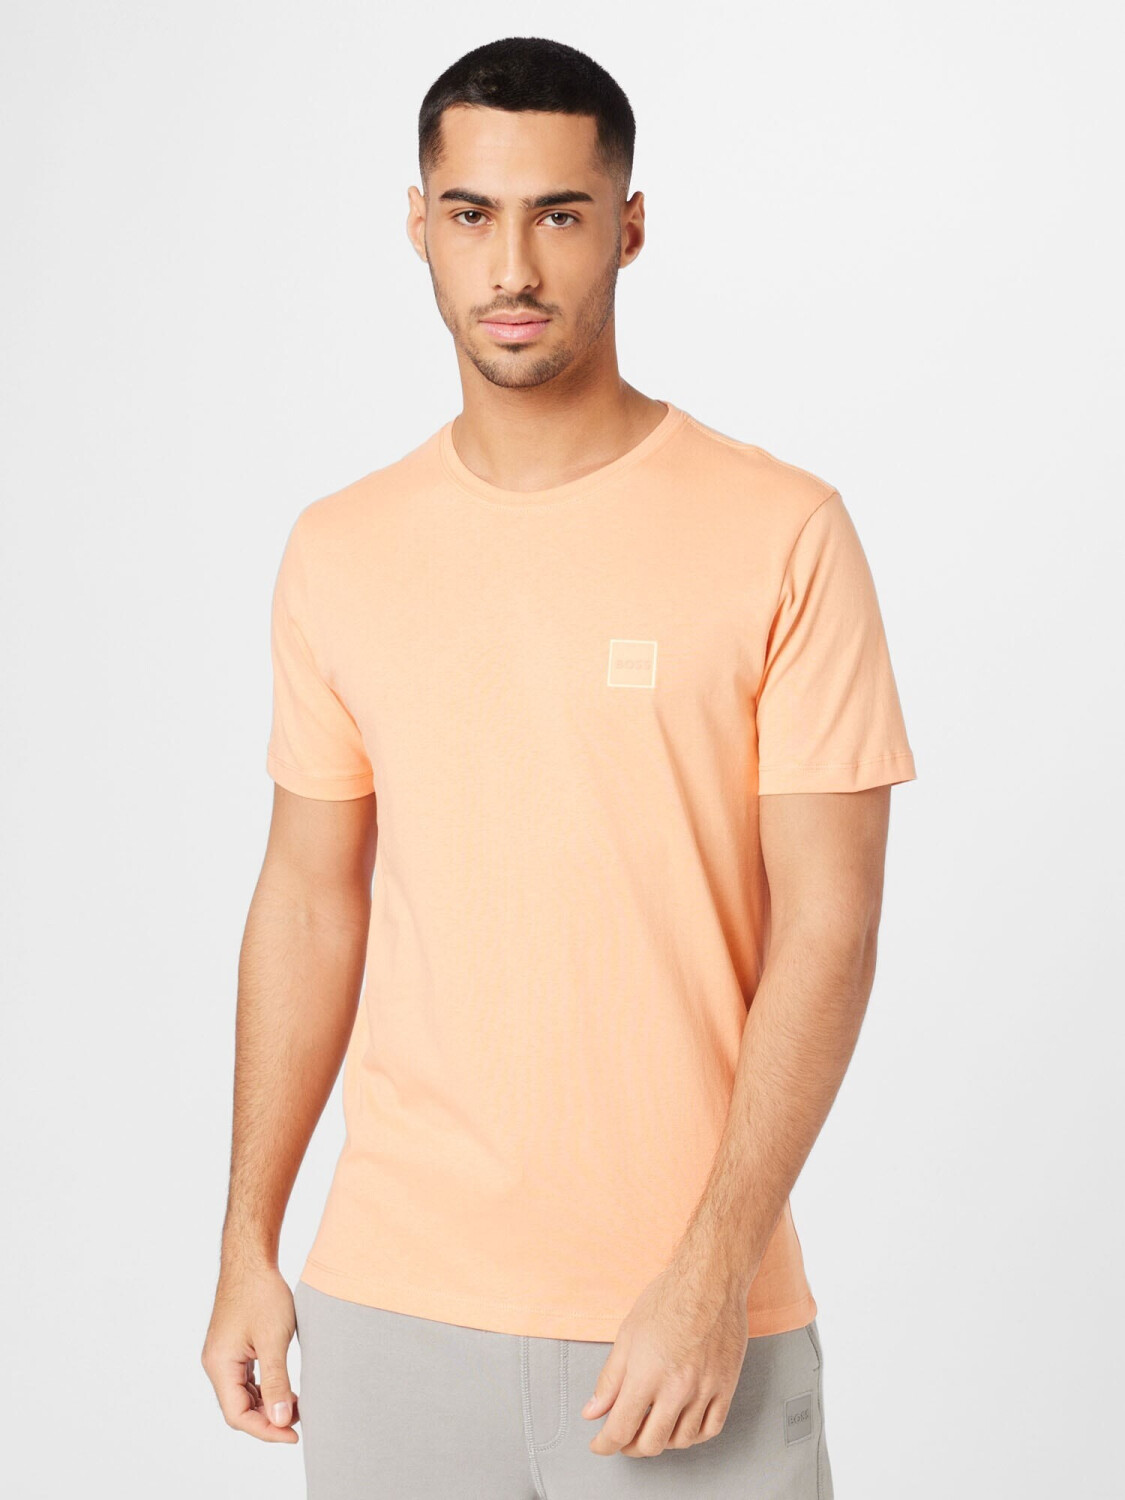 Hugo Boss Tales Short Sleeve T-Shirt (50472584-833) orange ab 27,99 € |  Preisvergleich bei